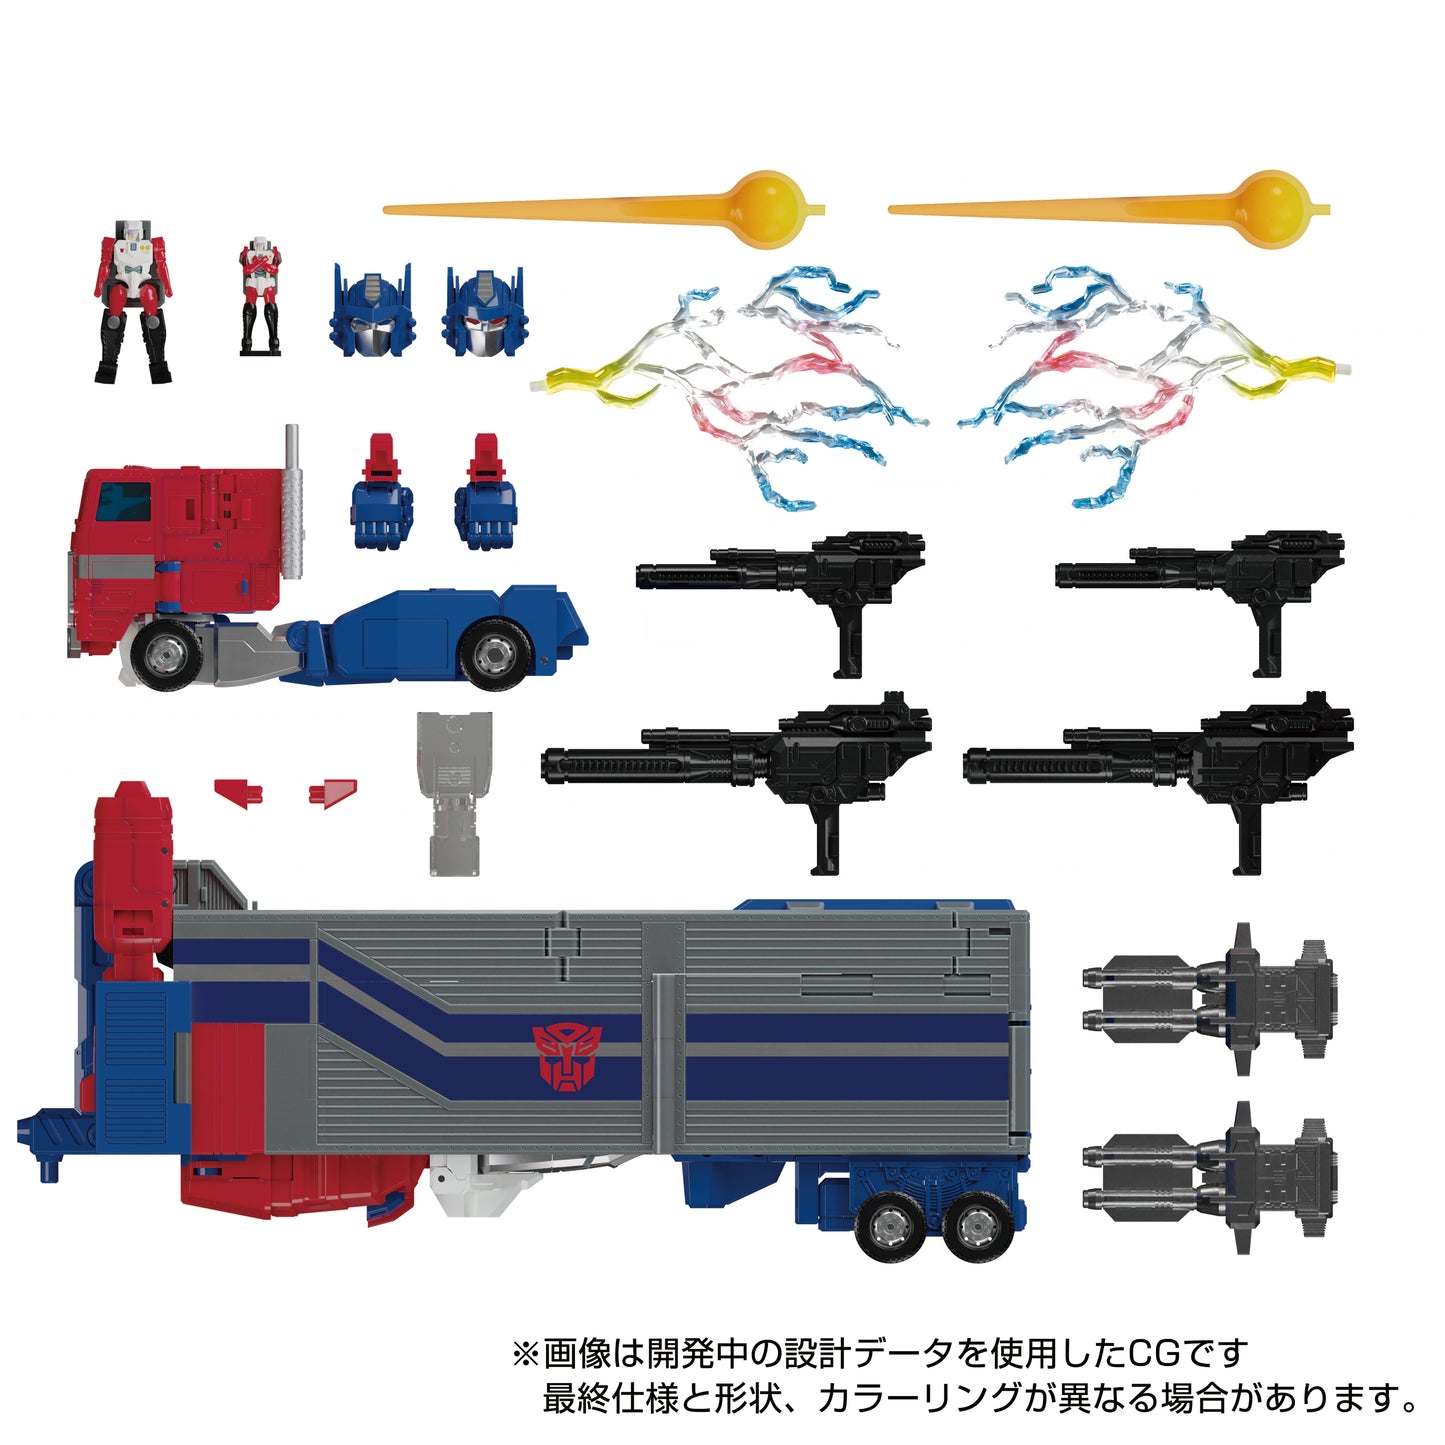 Super Ginrai Transformers Masterpiece MPG-09 Hasbro Action Figure Pre-order